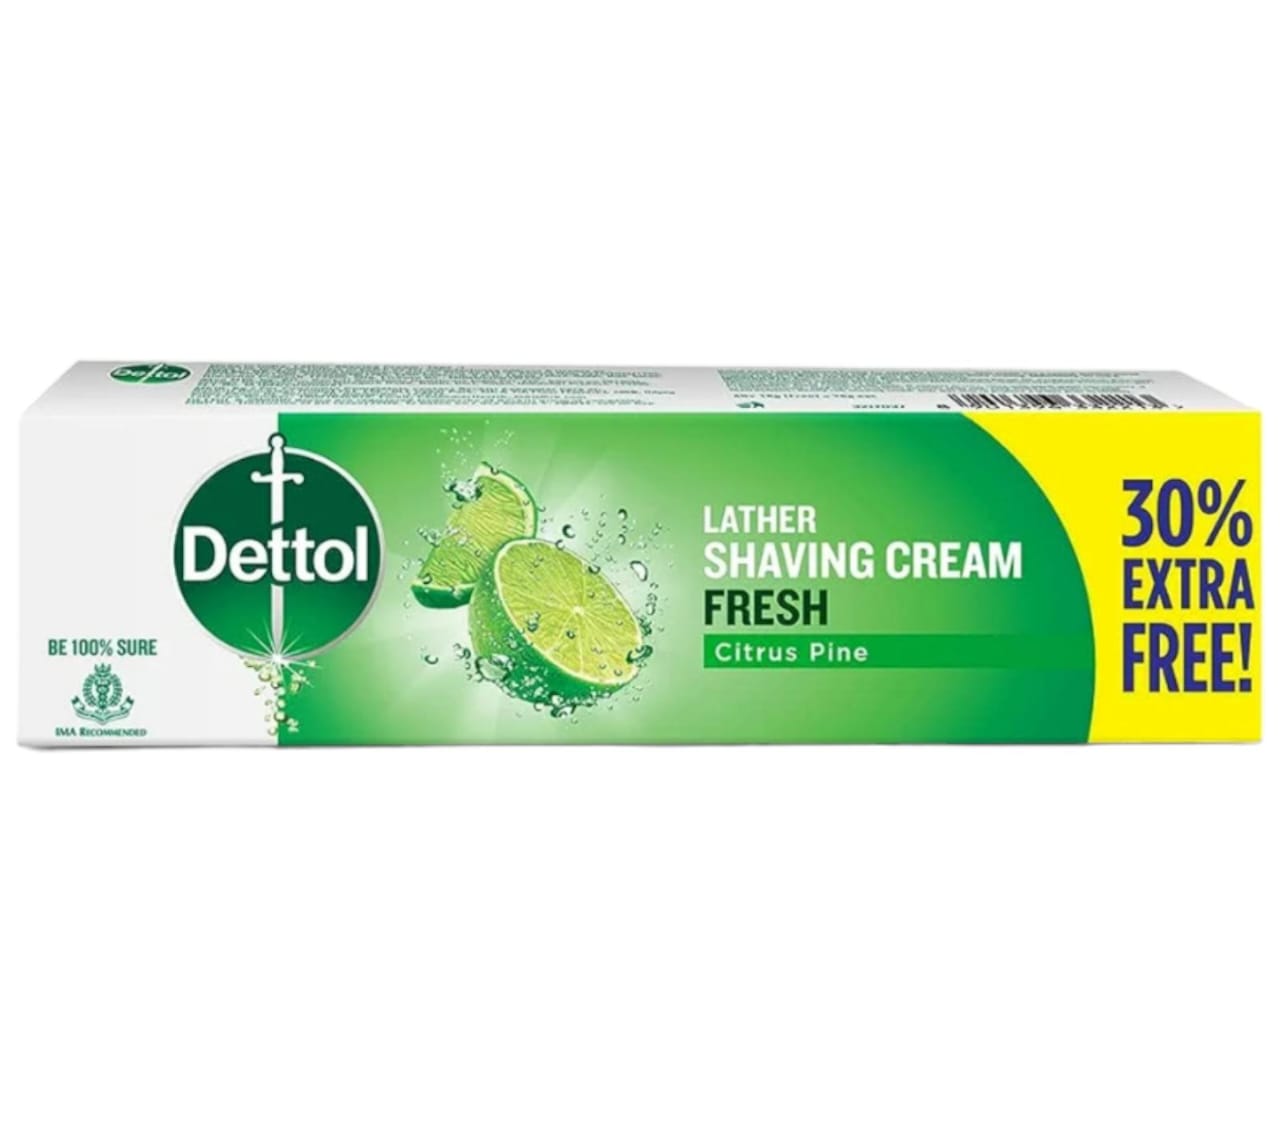 Dettol Shaving Cream